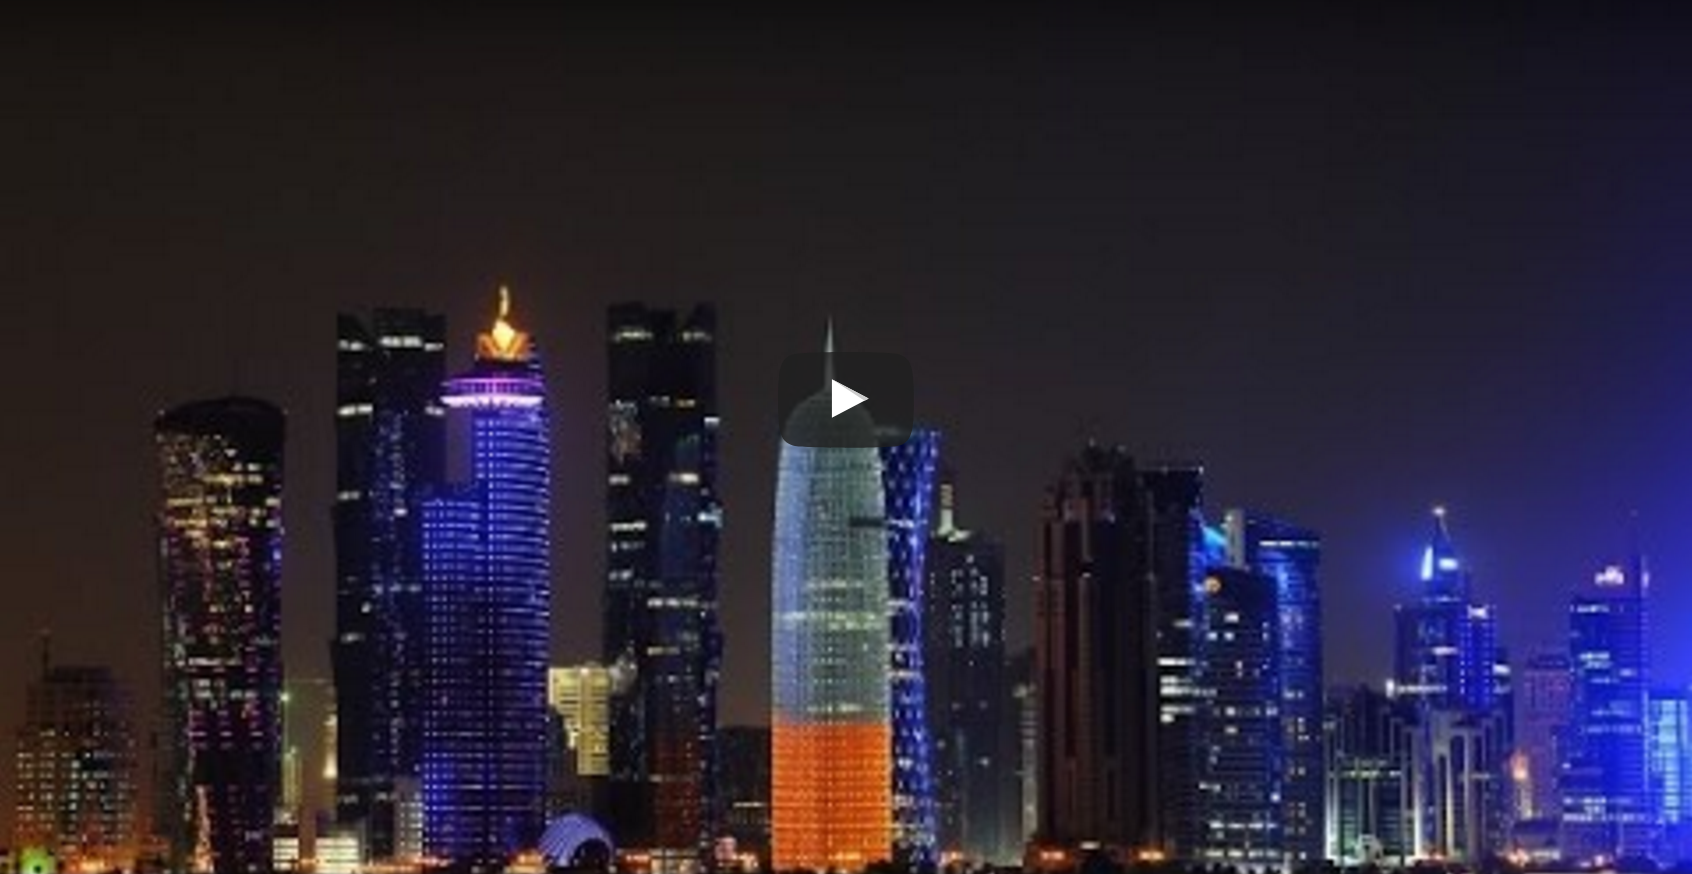 Qatar helium plant closure